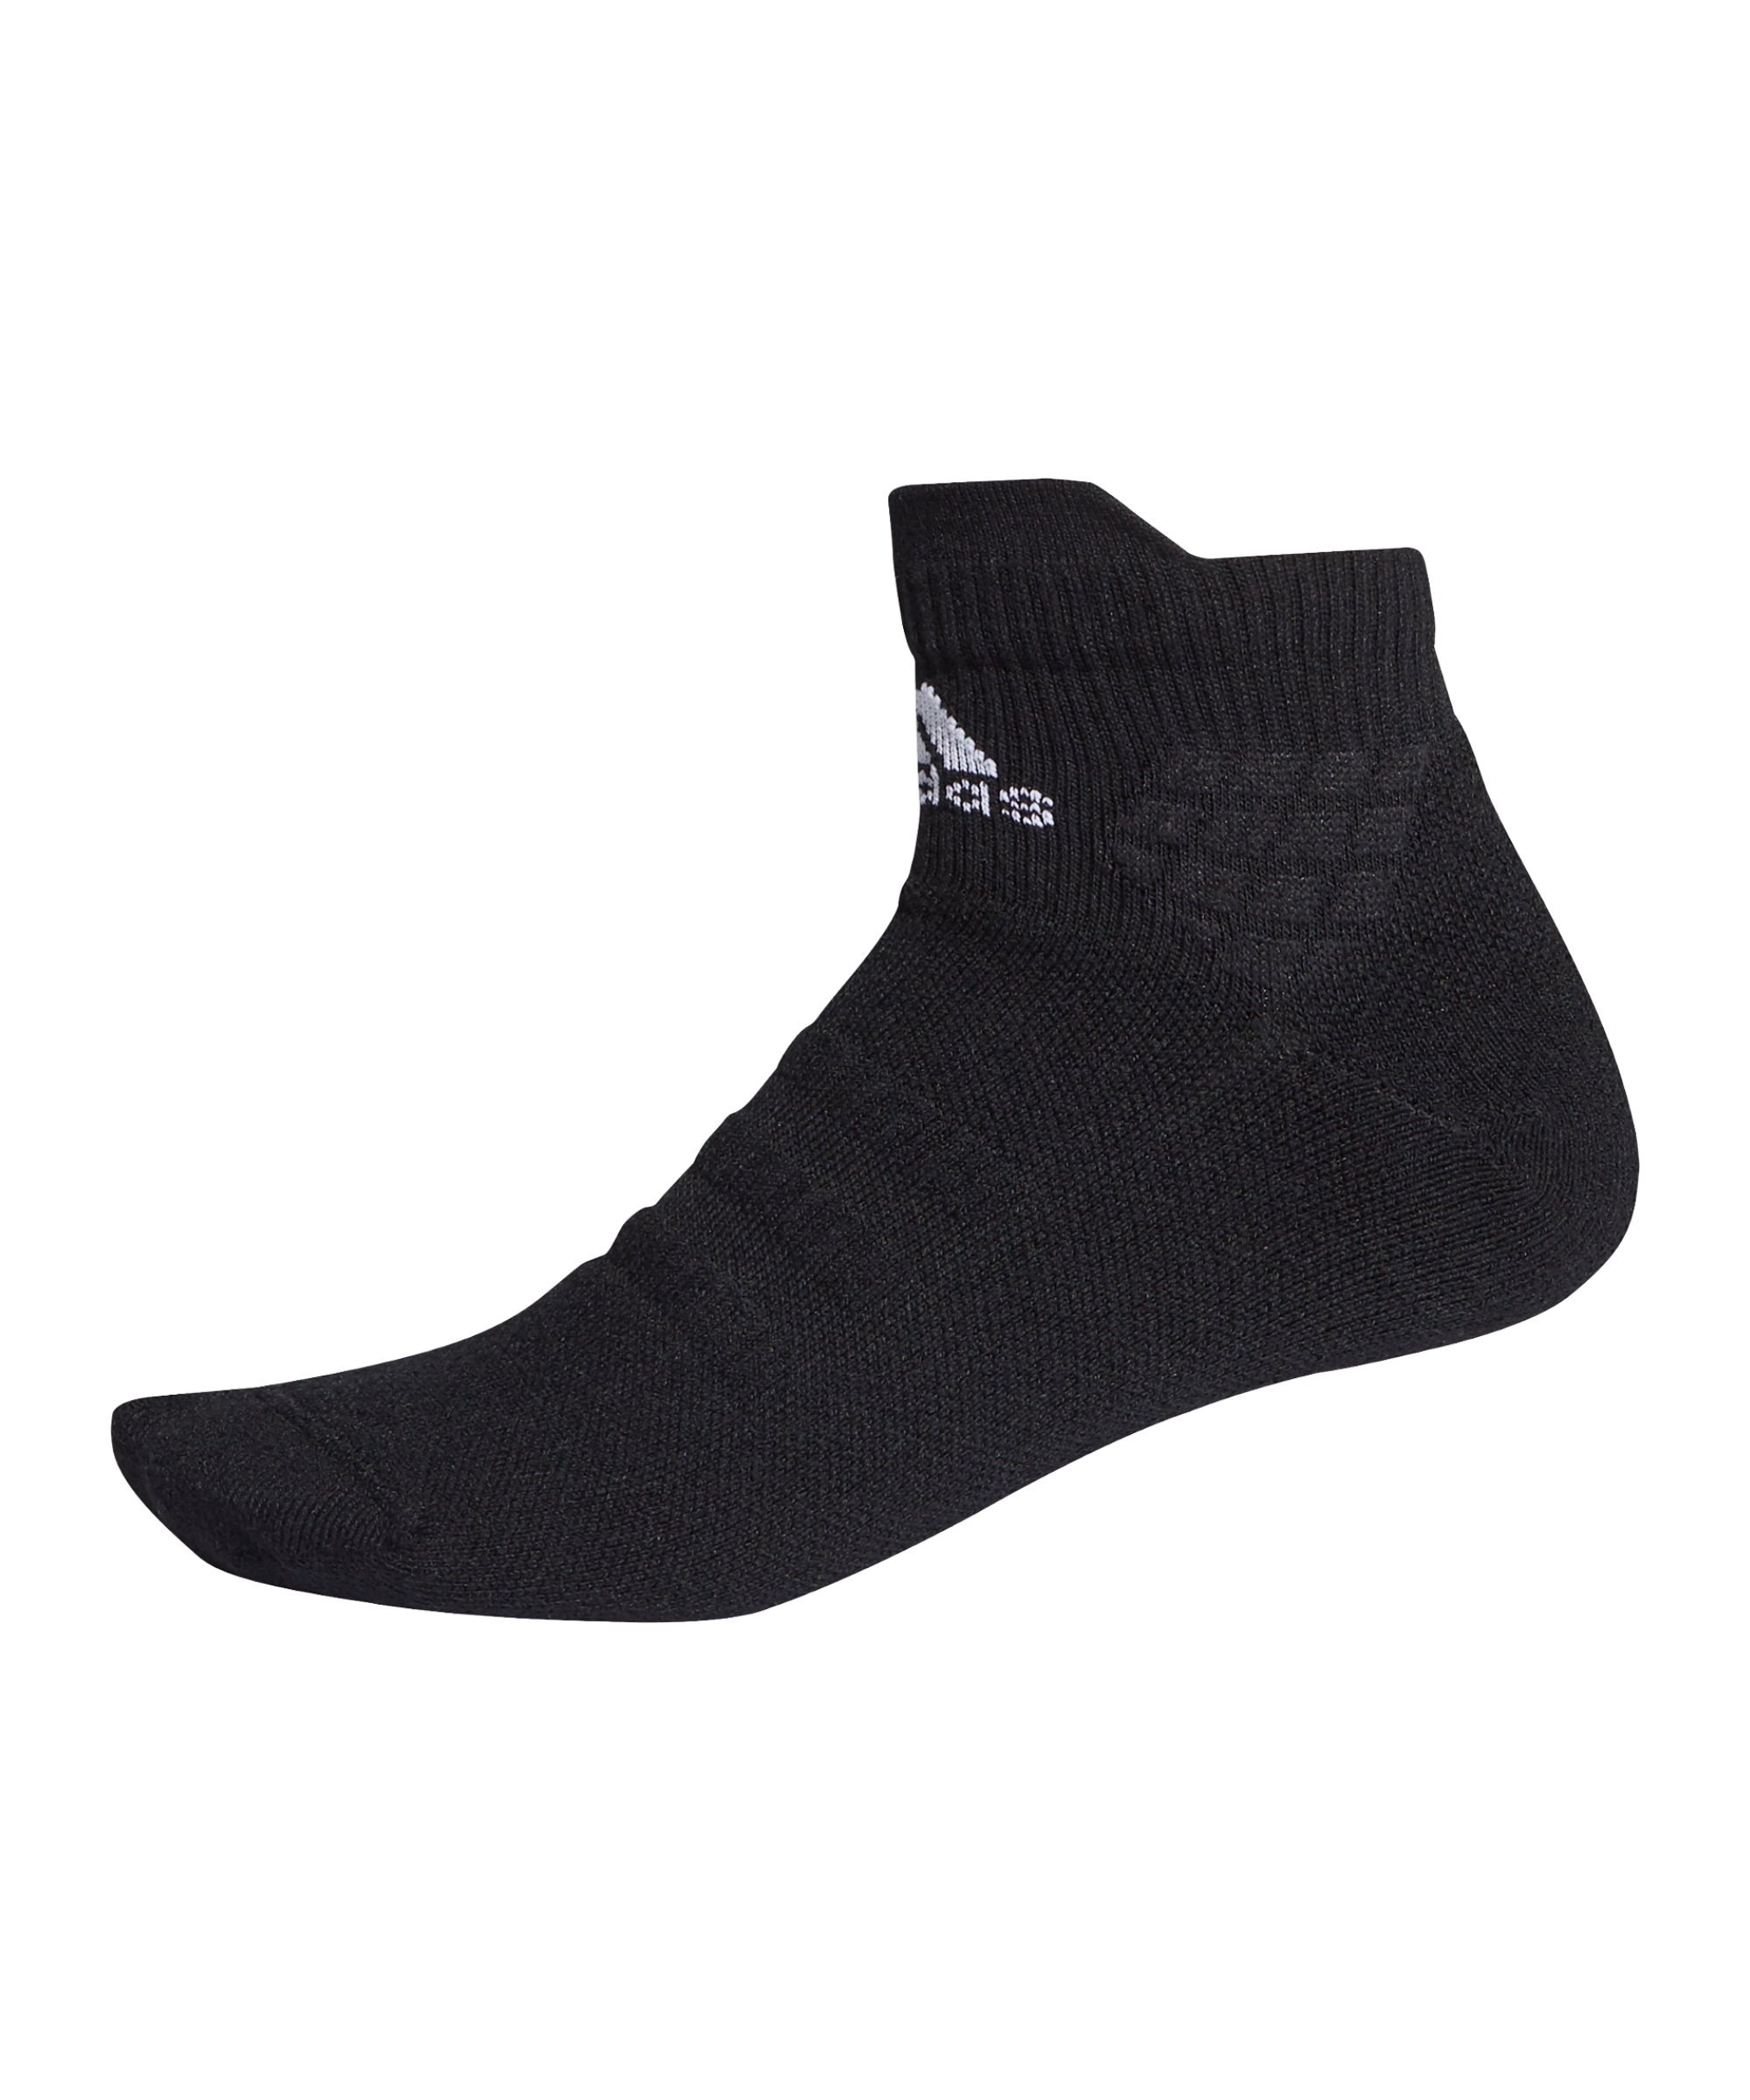 adidas Alphaskin Ankle MC Socken Schwarz - schwarz